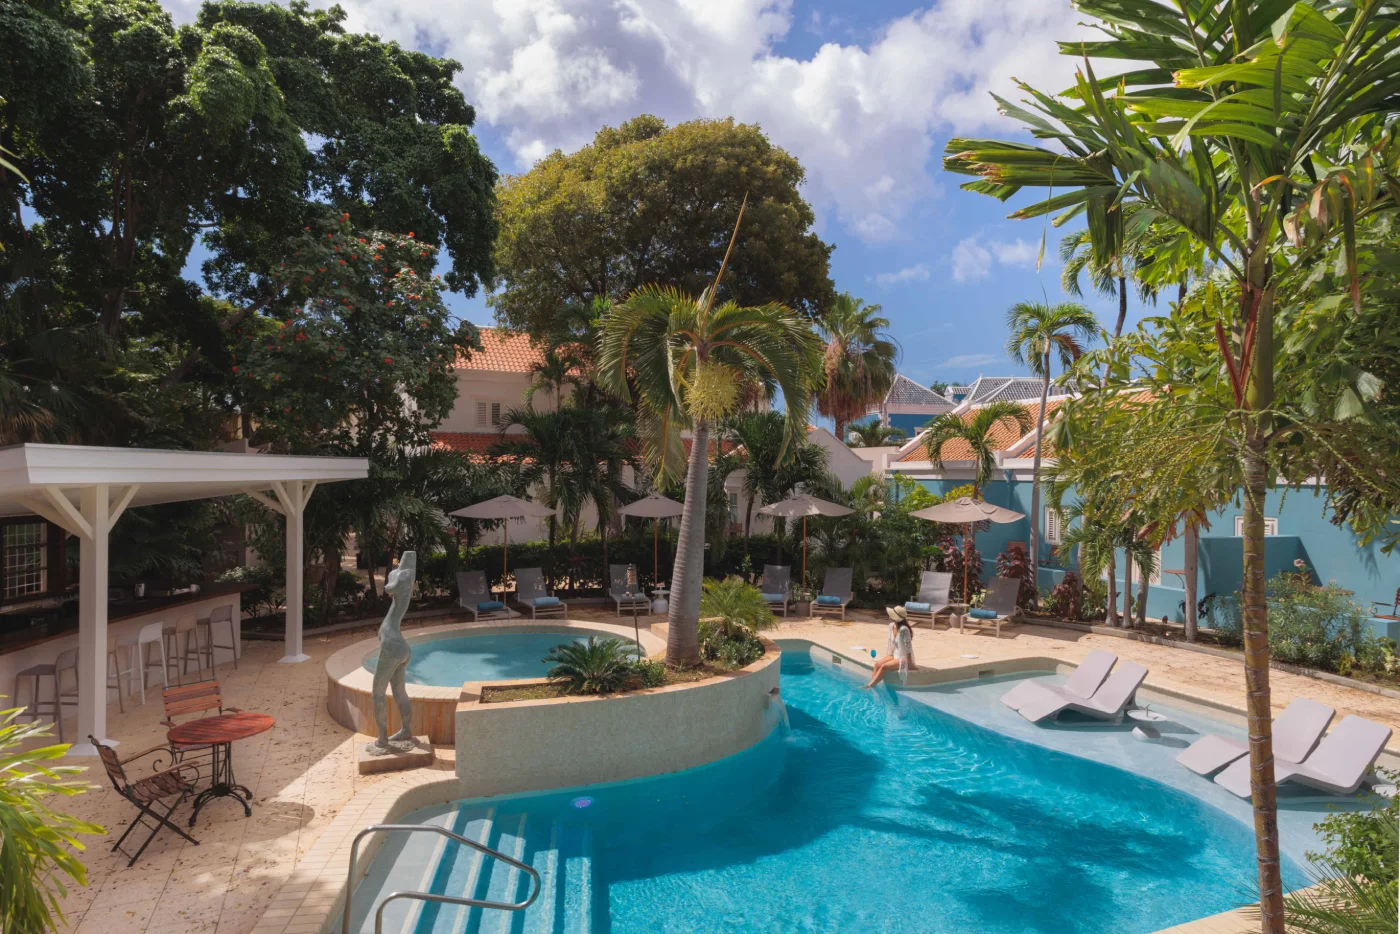 Kura Botanica Resort - Beste hotel Curacao